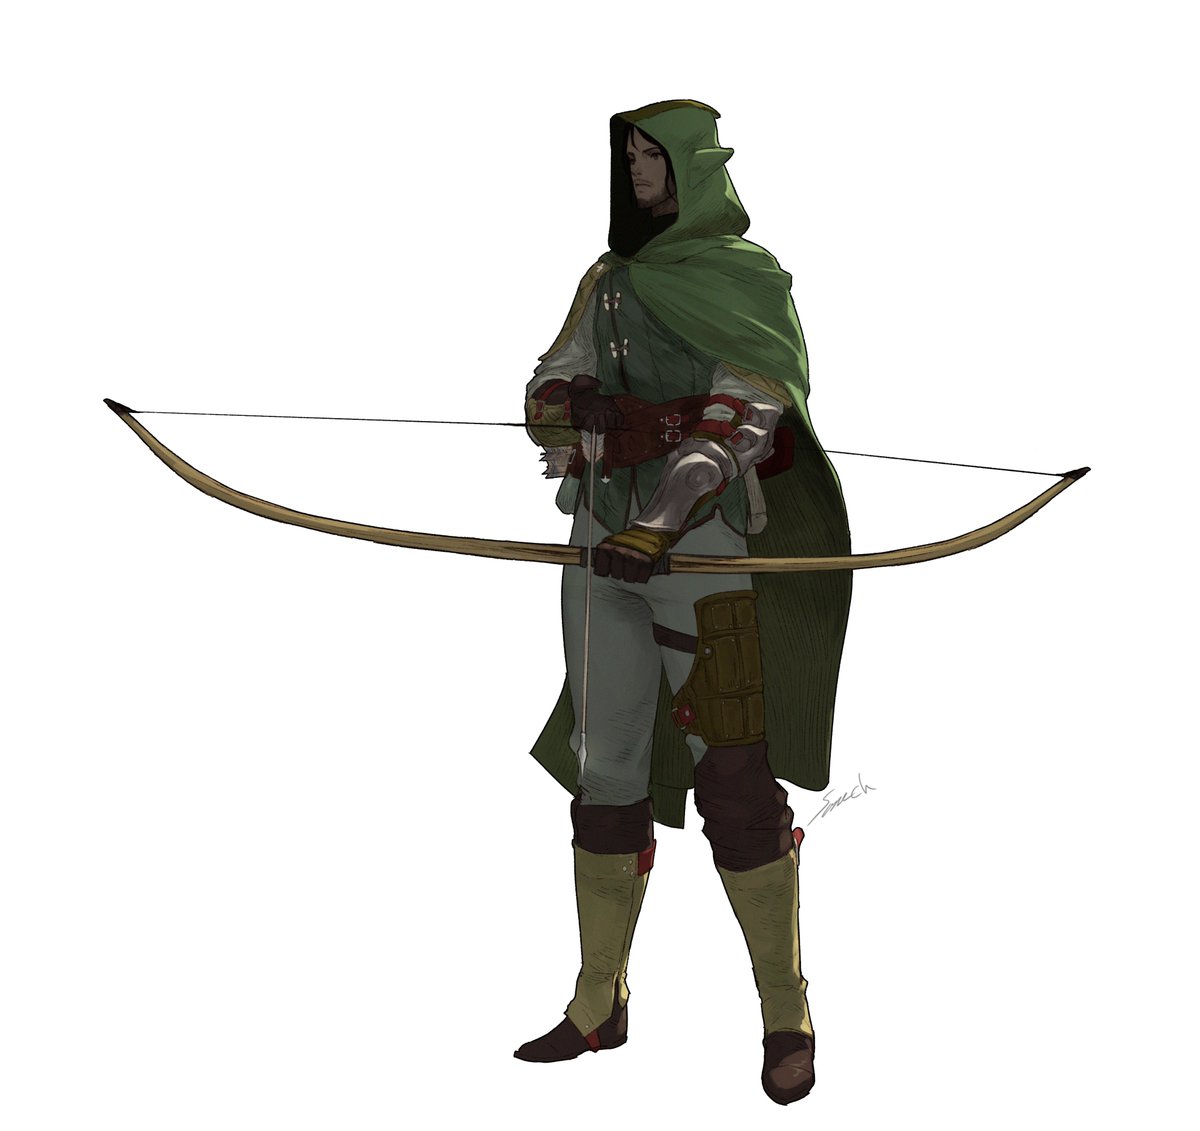 Sonech 弓士クラスのキャラクター 森エルフ 里を追放された弓の名手 普段は旅人の護衛や狩猟などをしている 剣士クラスのキャラ とはよく仕事がかぶる Sonechfantasy